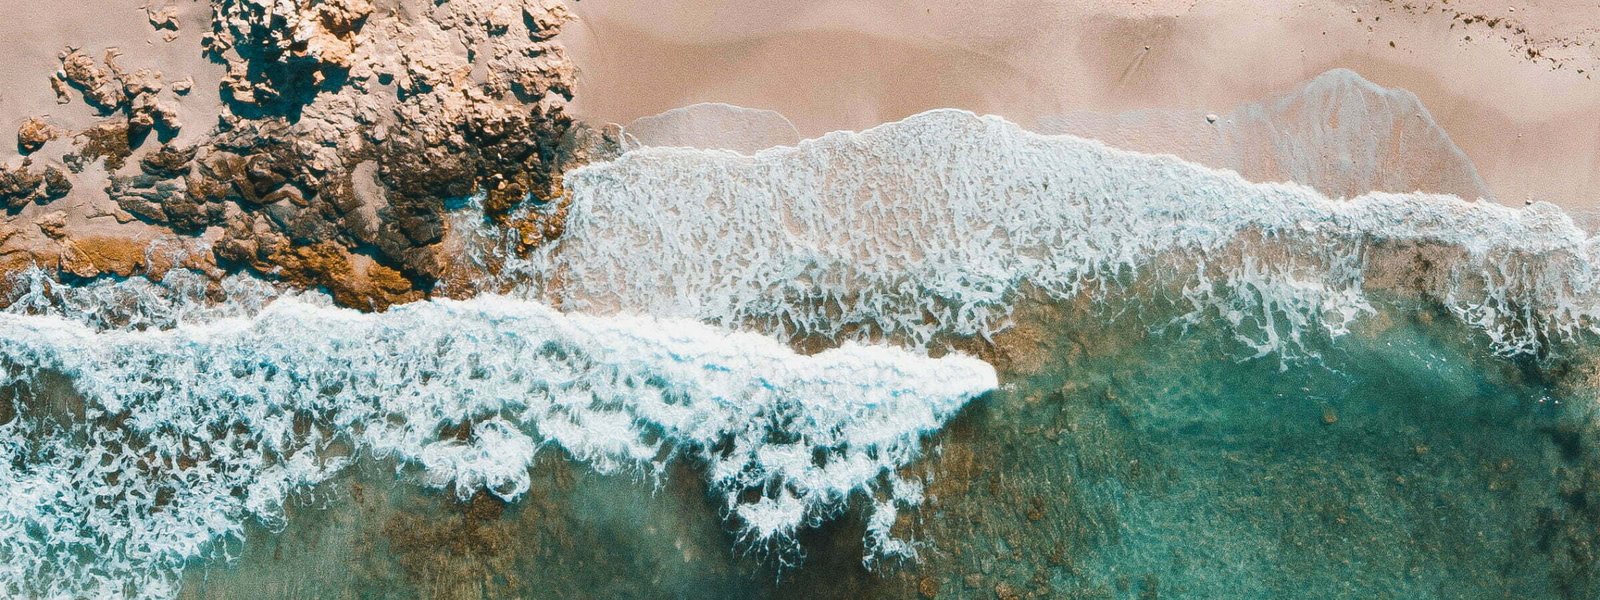 Blue waves crash onto a pink and white sand beach